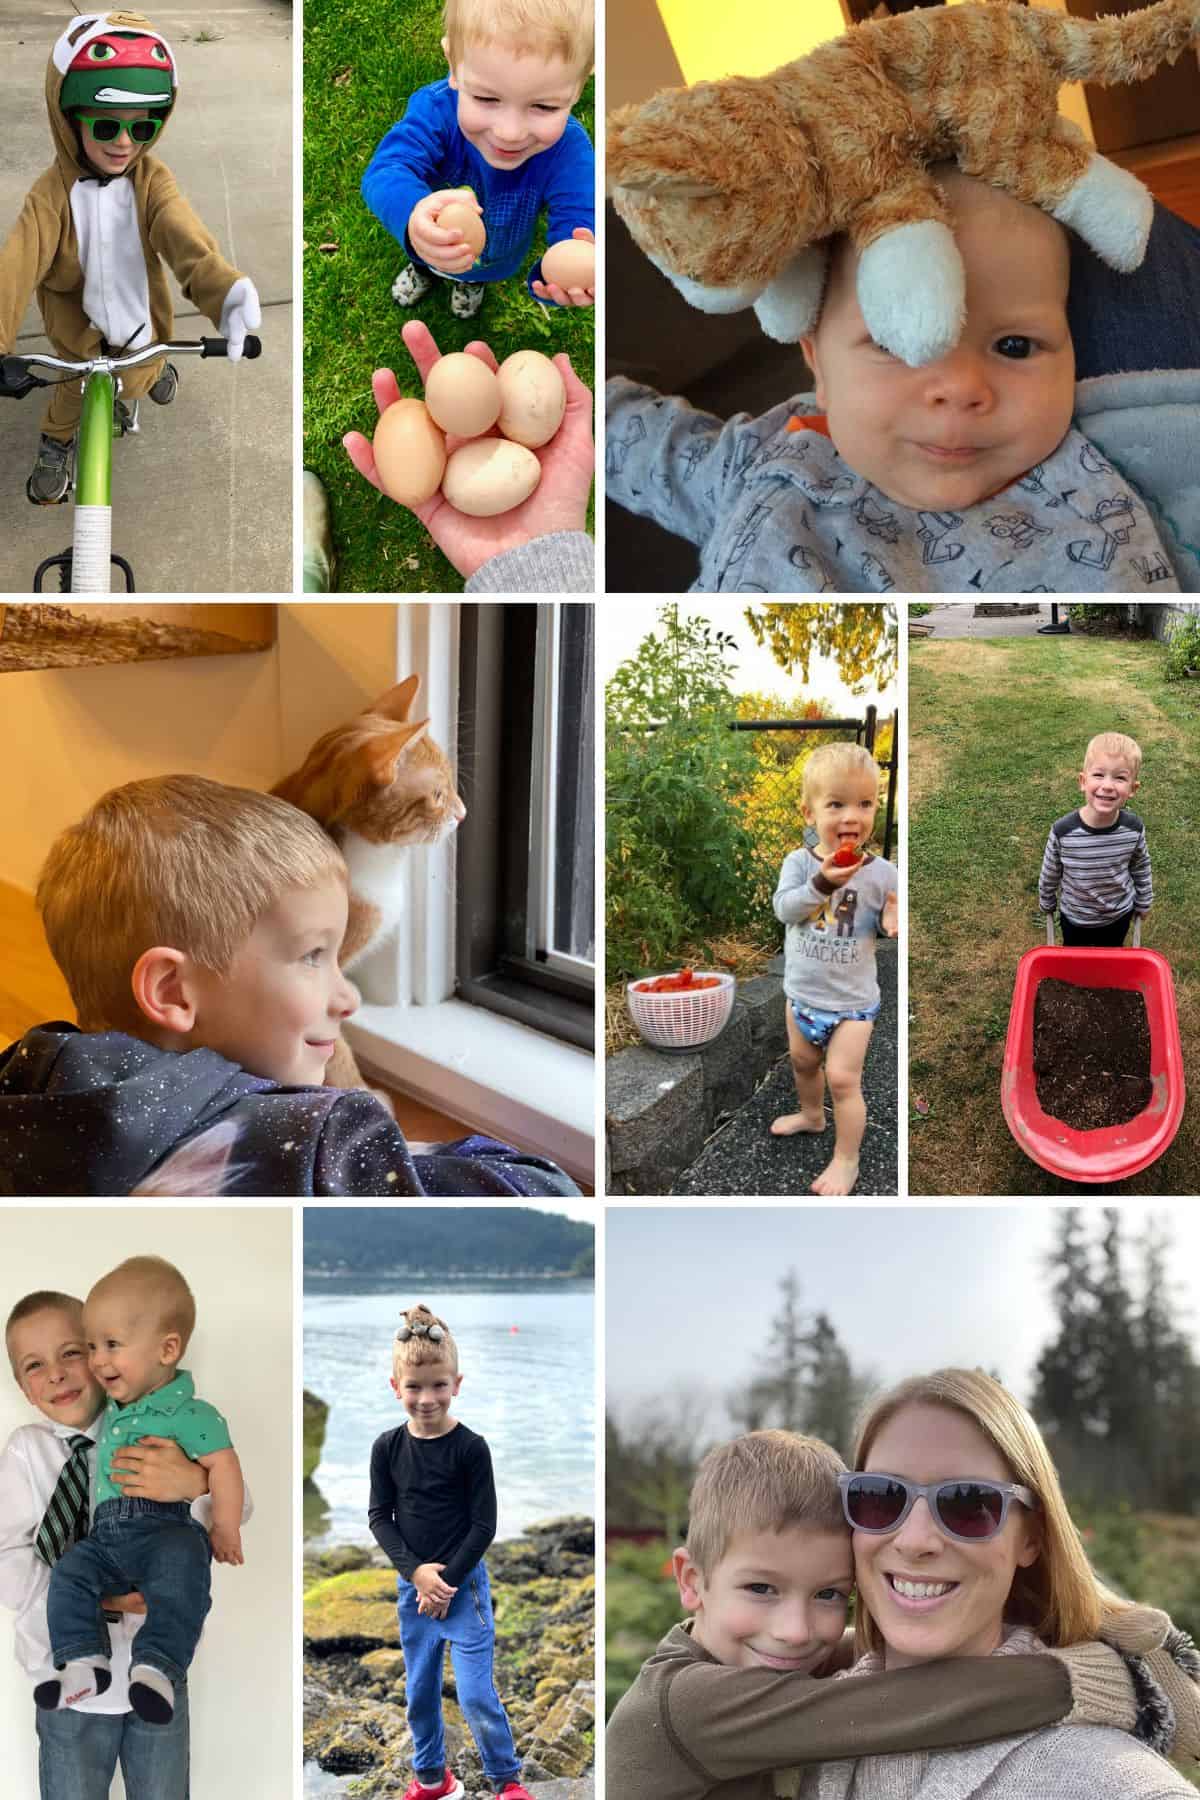 9 photos of a little kid.